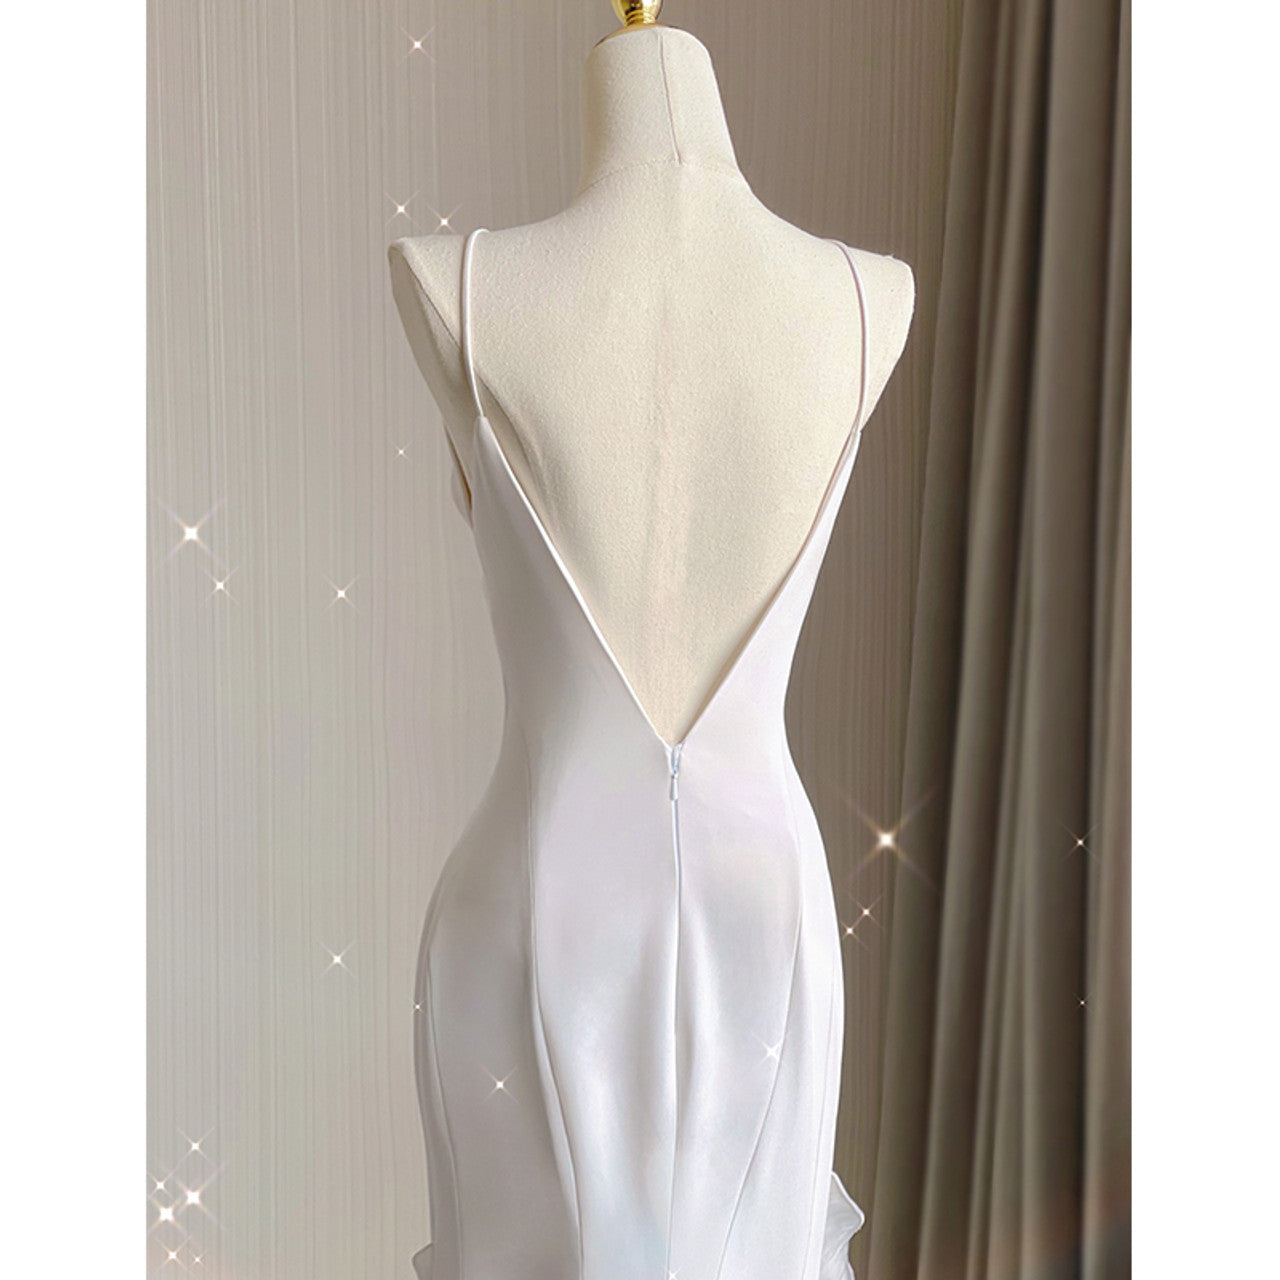 White Sheath Halter Backless Wedding Dress    fg3671